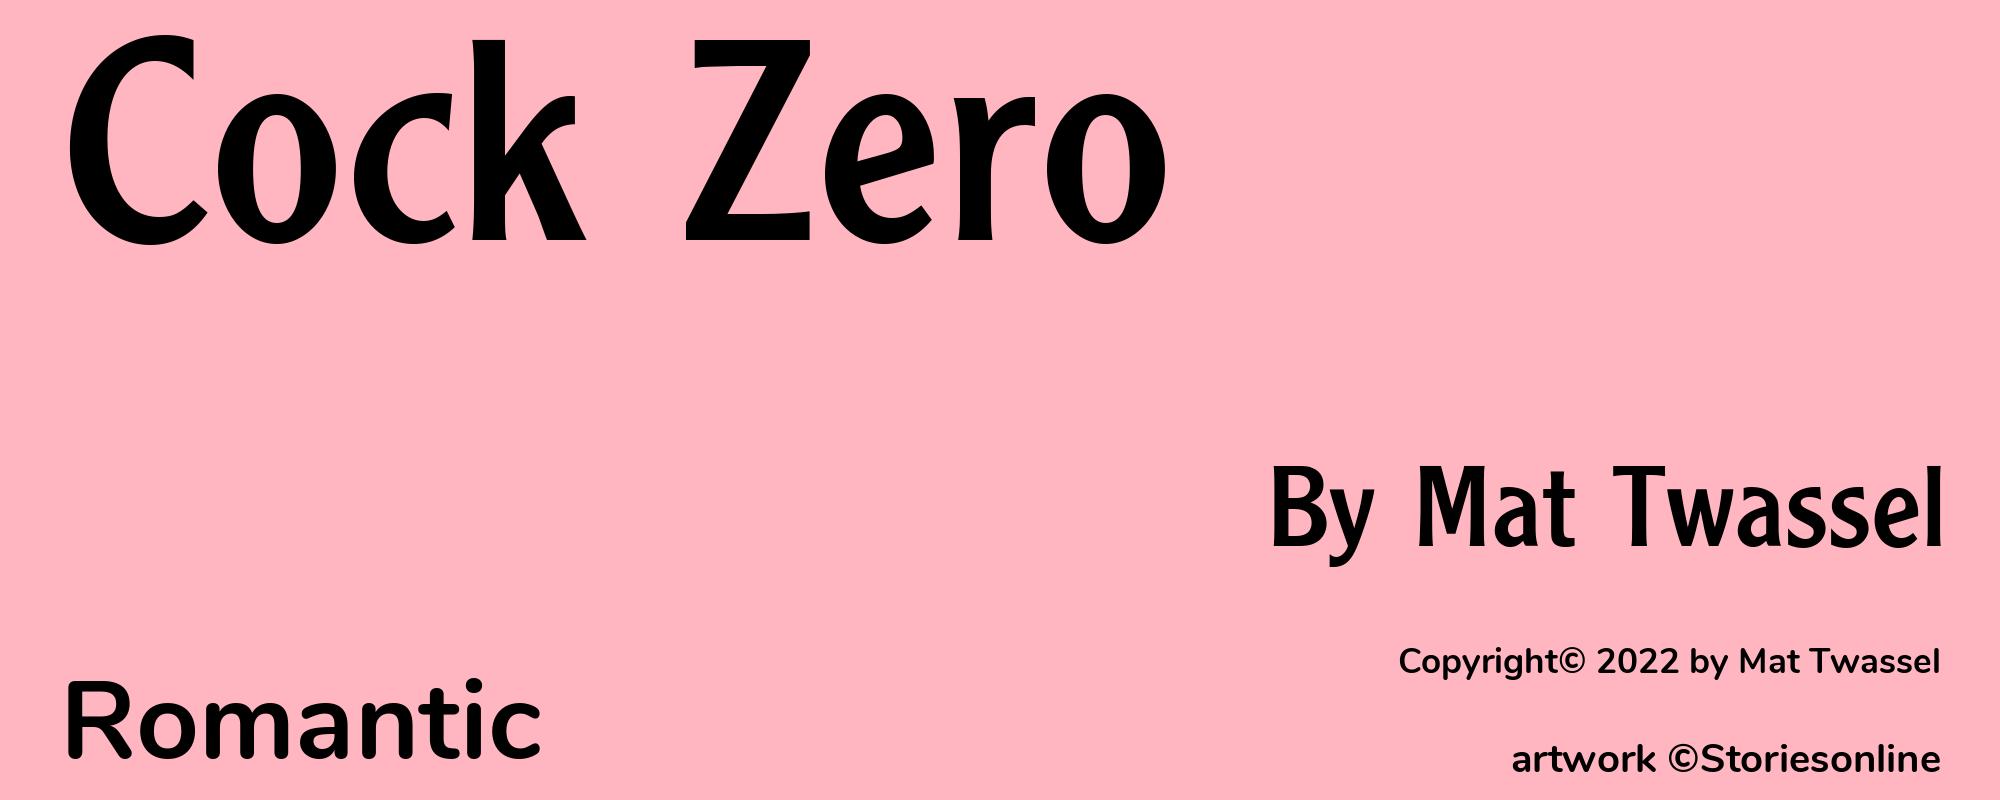 Cock Zero - Cover